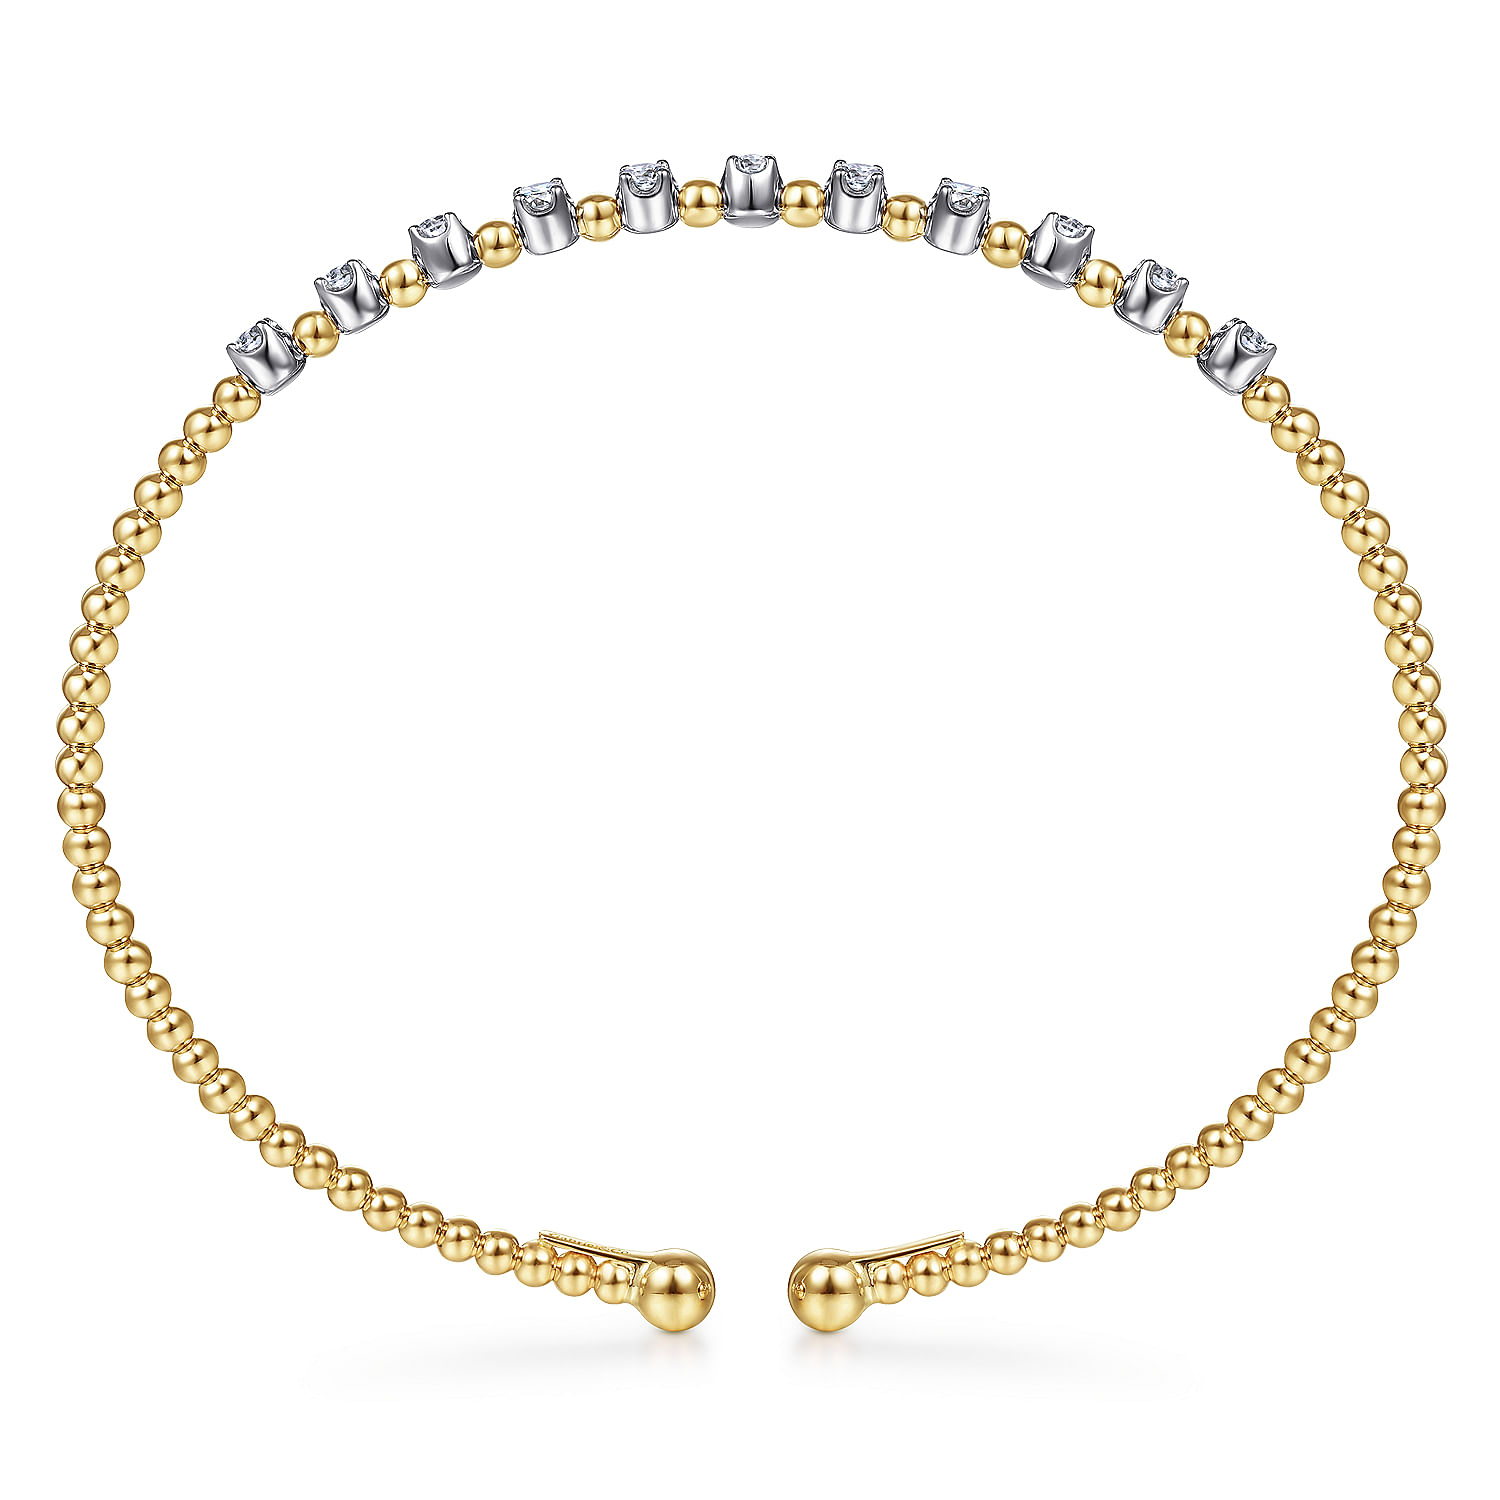 14K Yellow Gold Bujukan Bead Split Cuff Bracelet with Round White Gold Diamond Stations